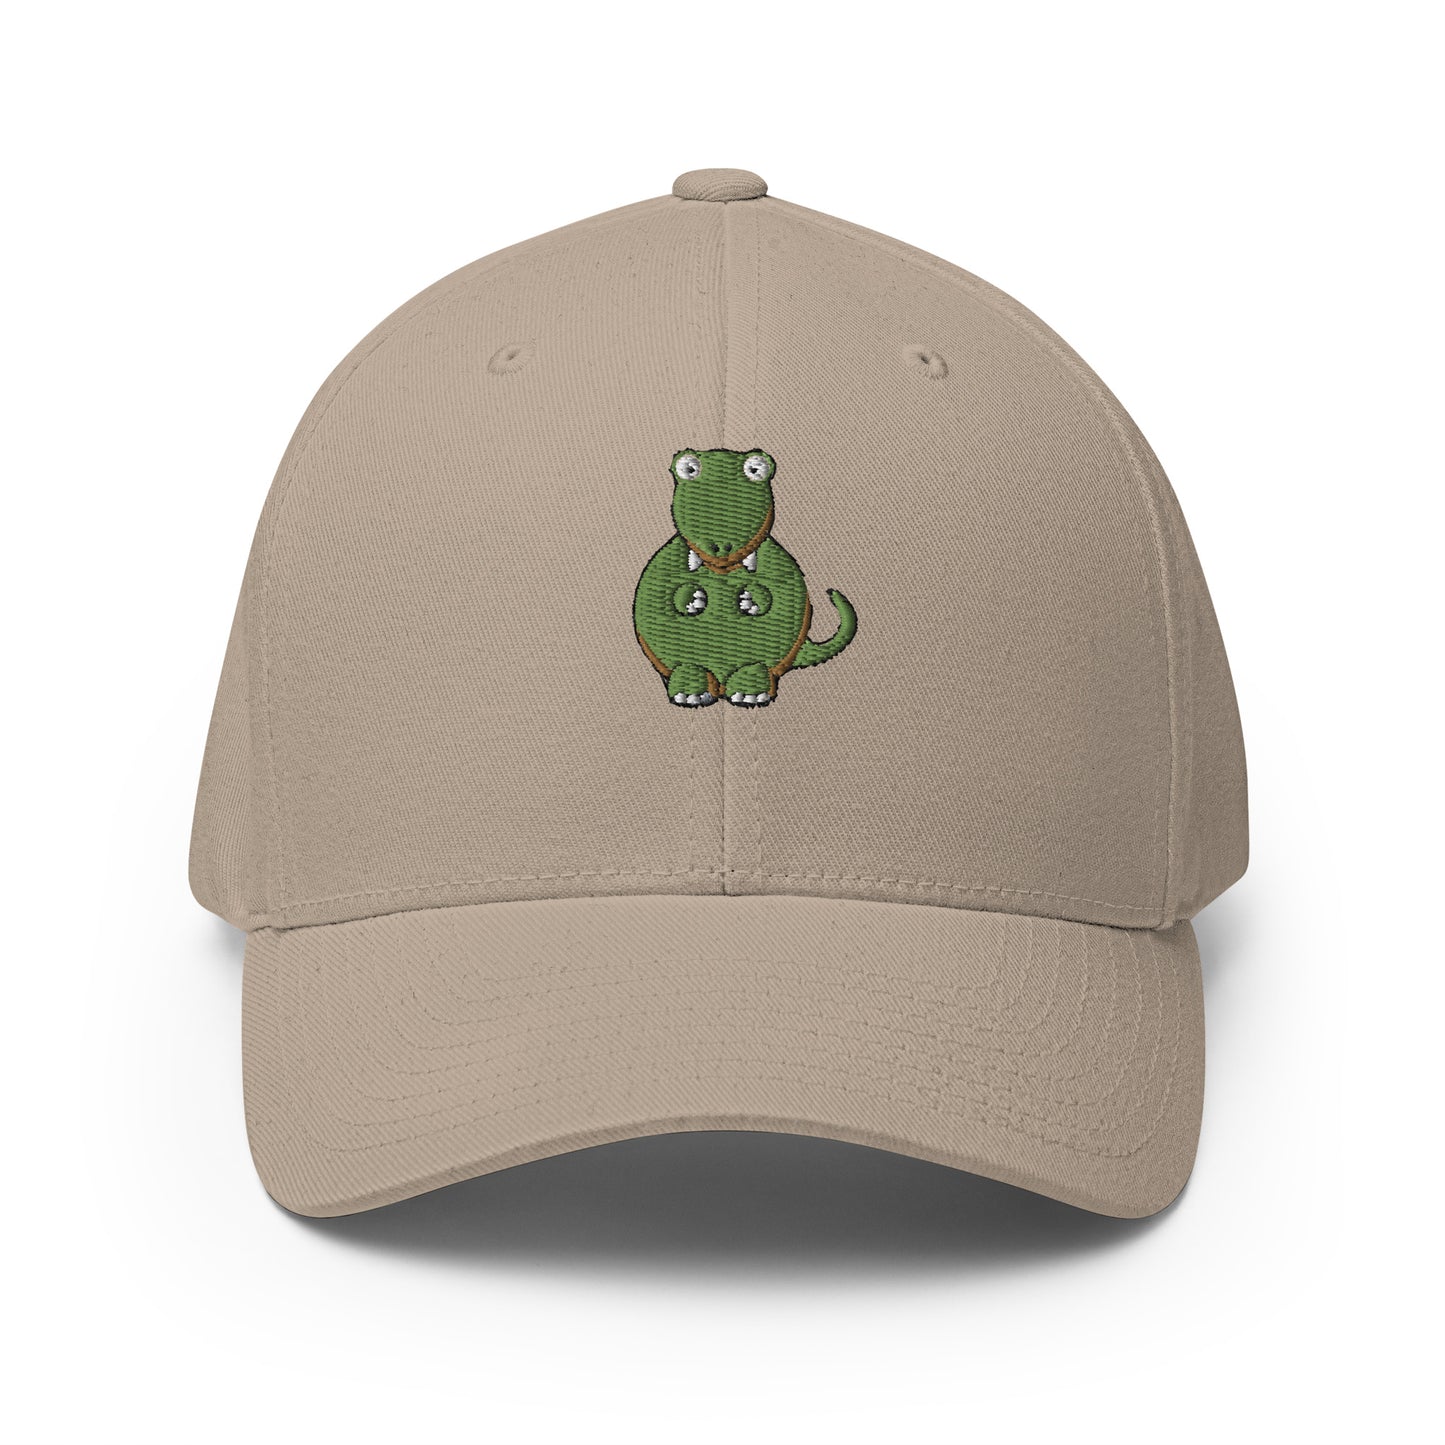 Baseball Cap with Dinosaur Symbol